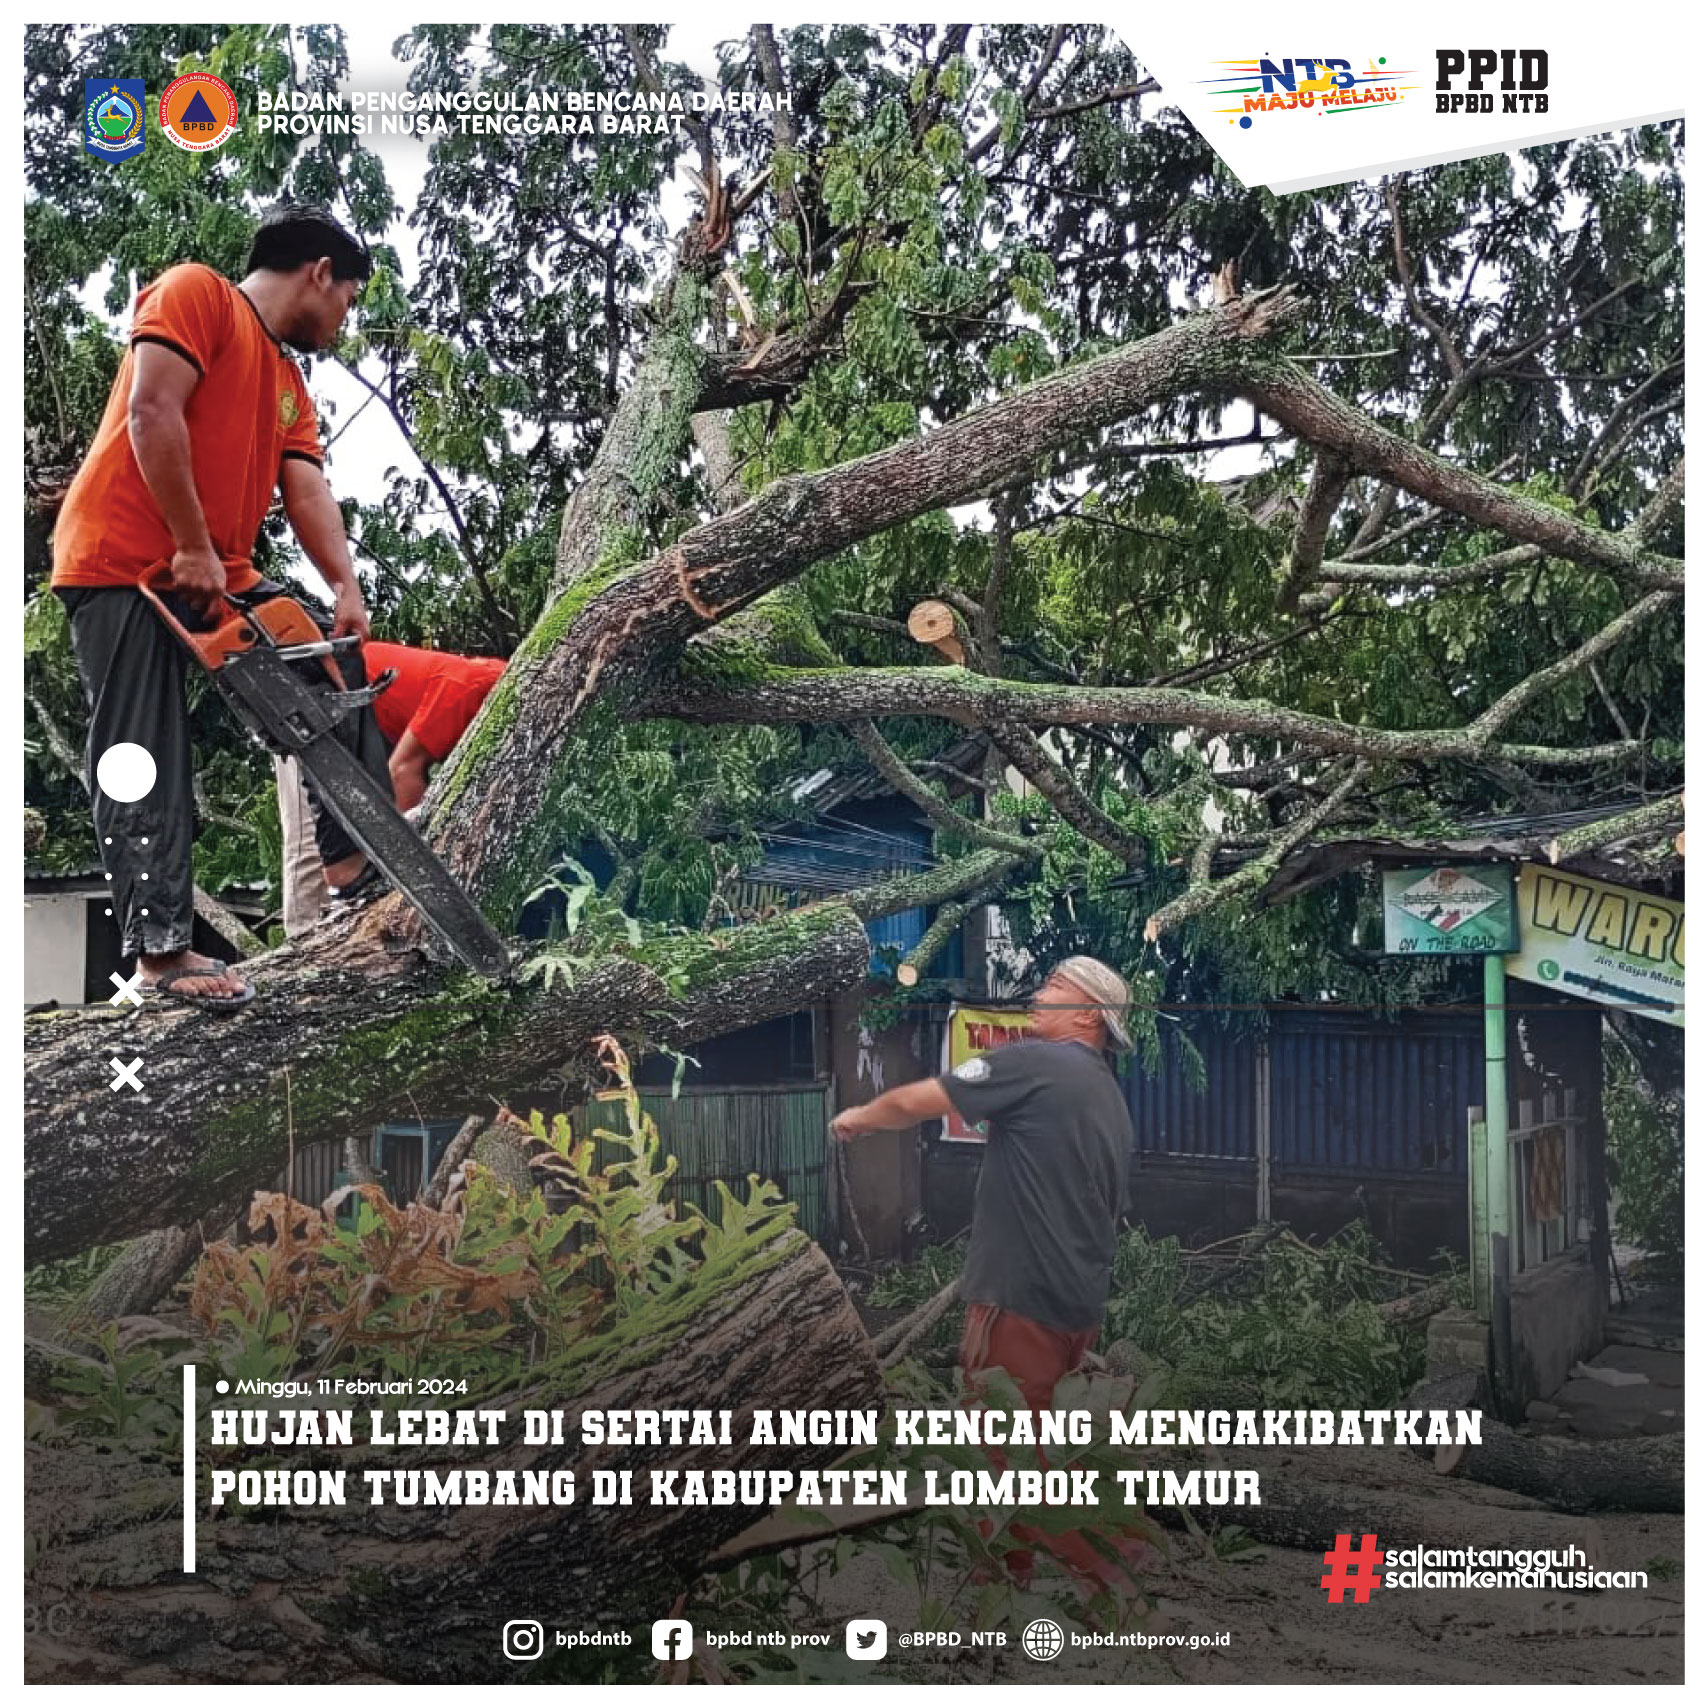 Hujan Lebat di Sertai Angin Kencang Mengakibatkan Pohon Tumbang di Kabupaten Lombok Timur (Minggu, 11 Februari 2024)